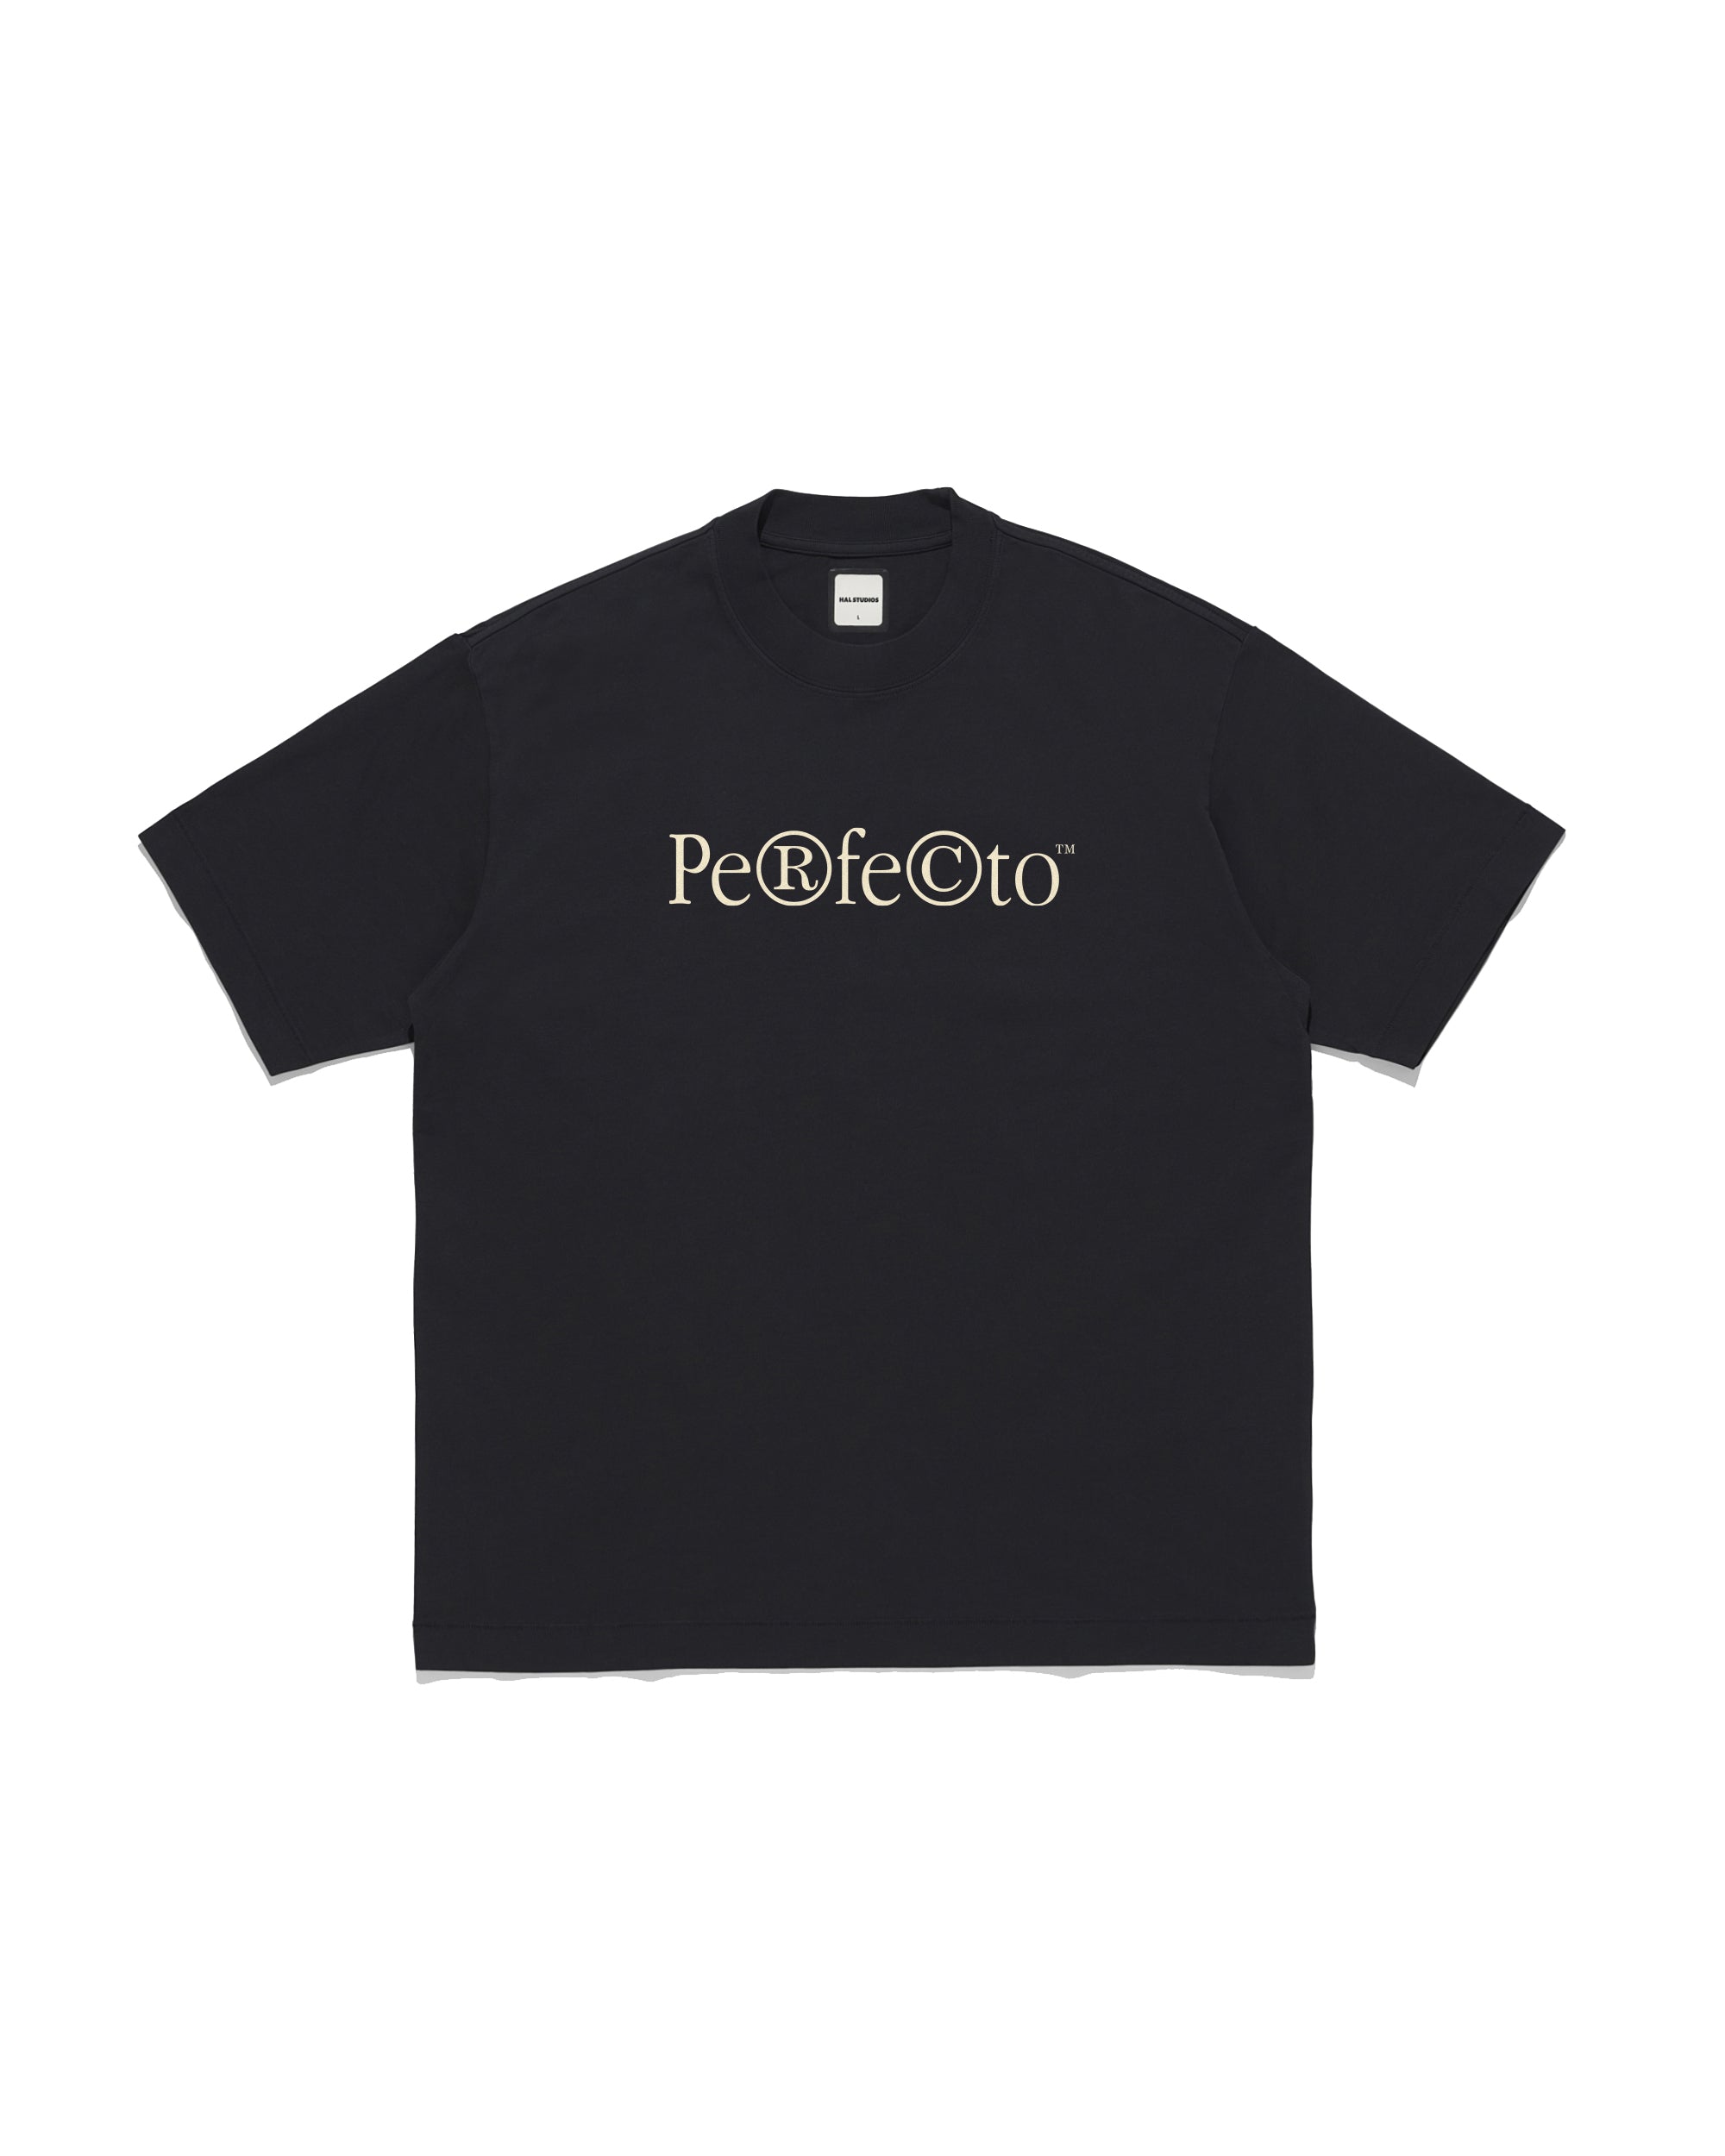 Perfecto T-Shirt - Black